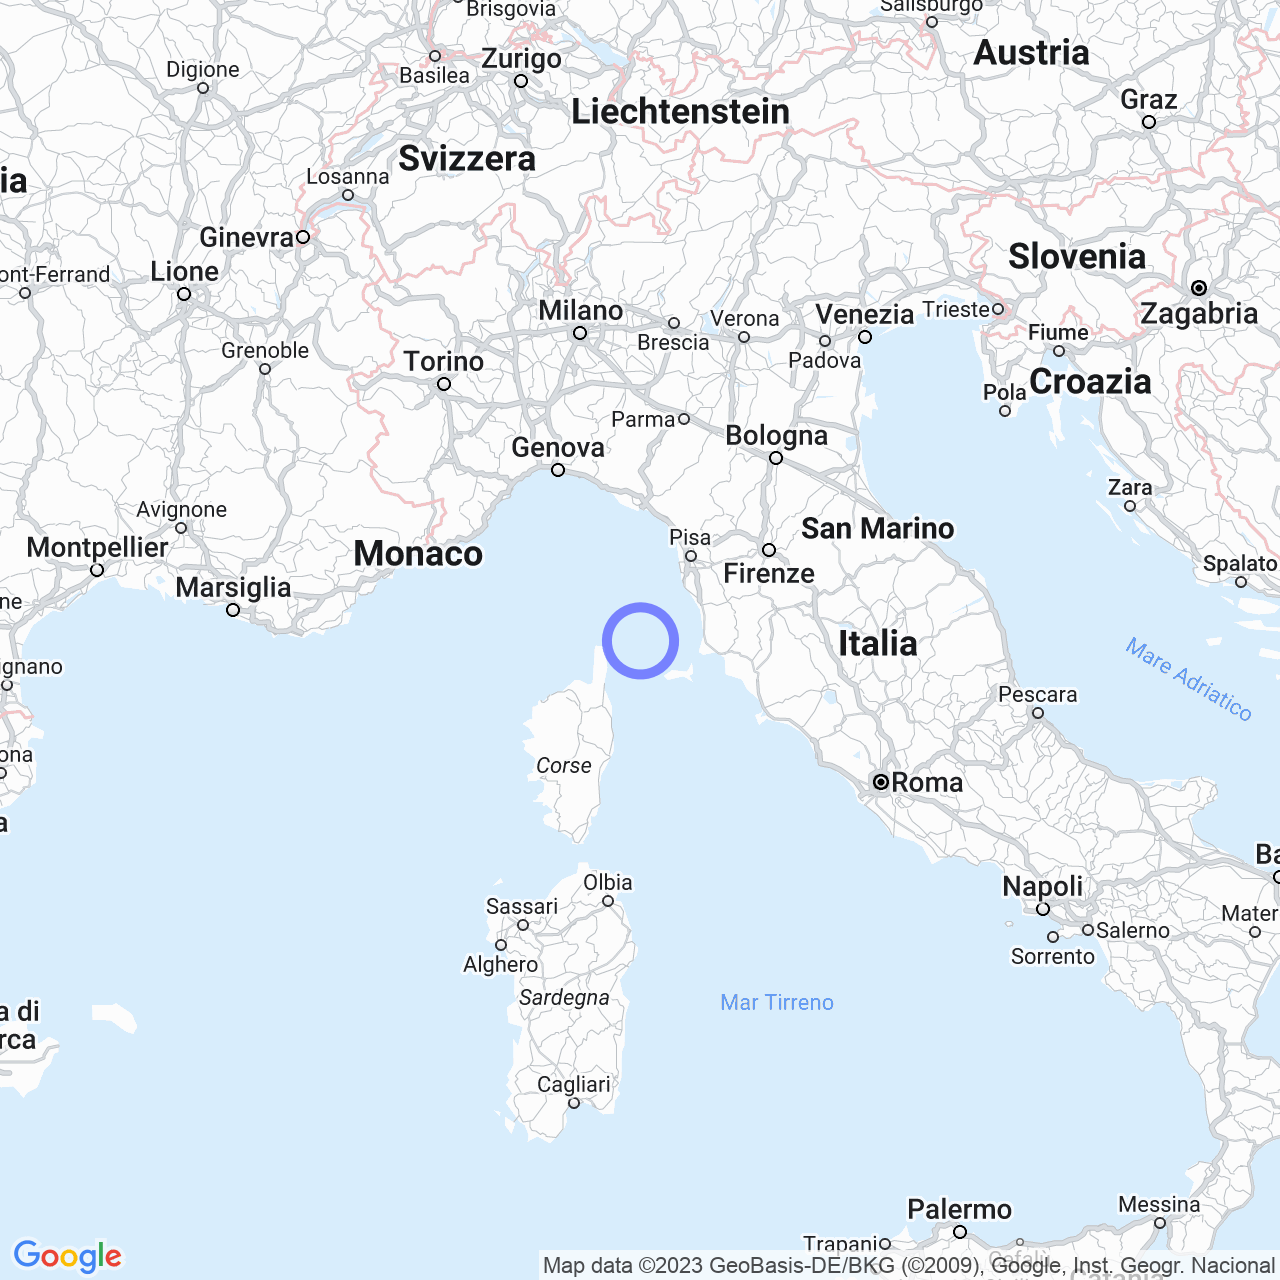 Gorgona: the island of history and nature in the Ligurian Sea.